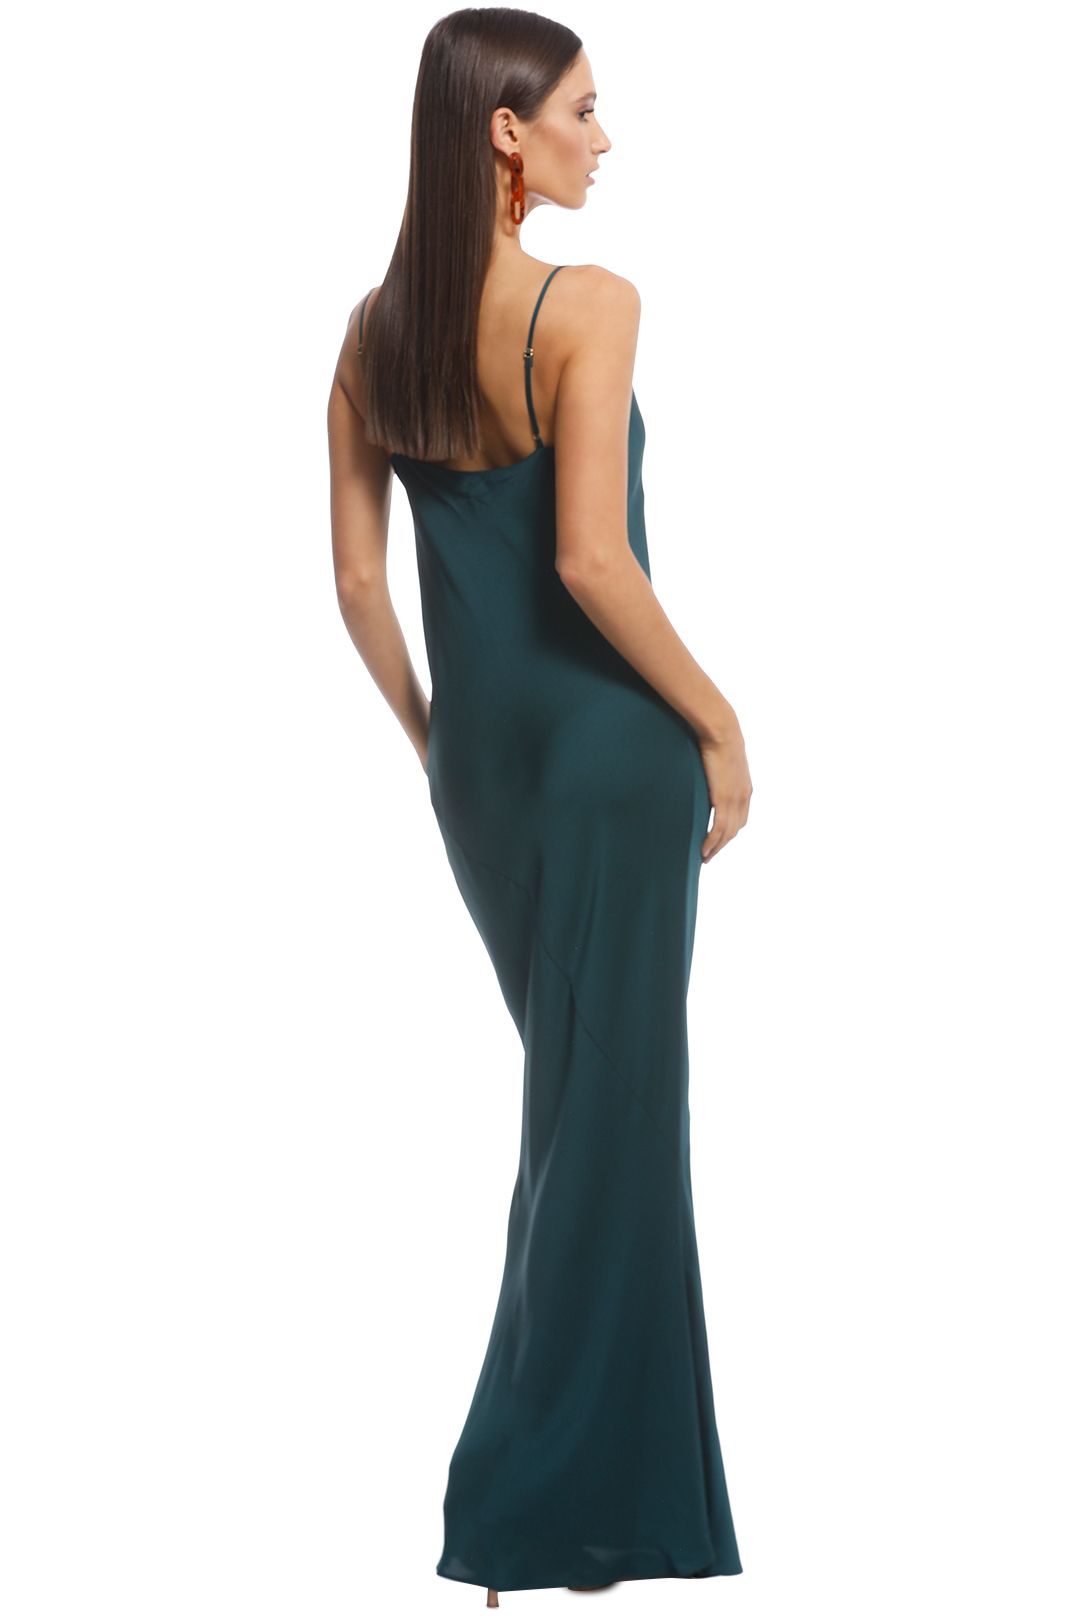 Shona Joy - Luxe Bias Cowl Slip Dress - Emerald - Back